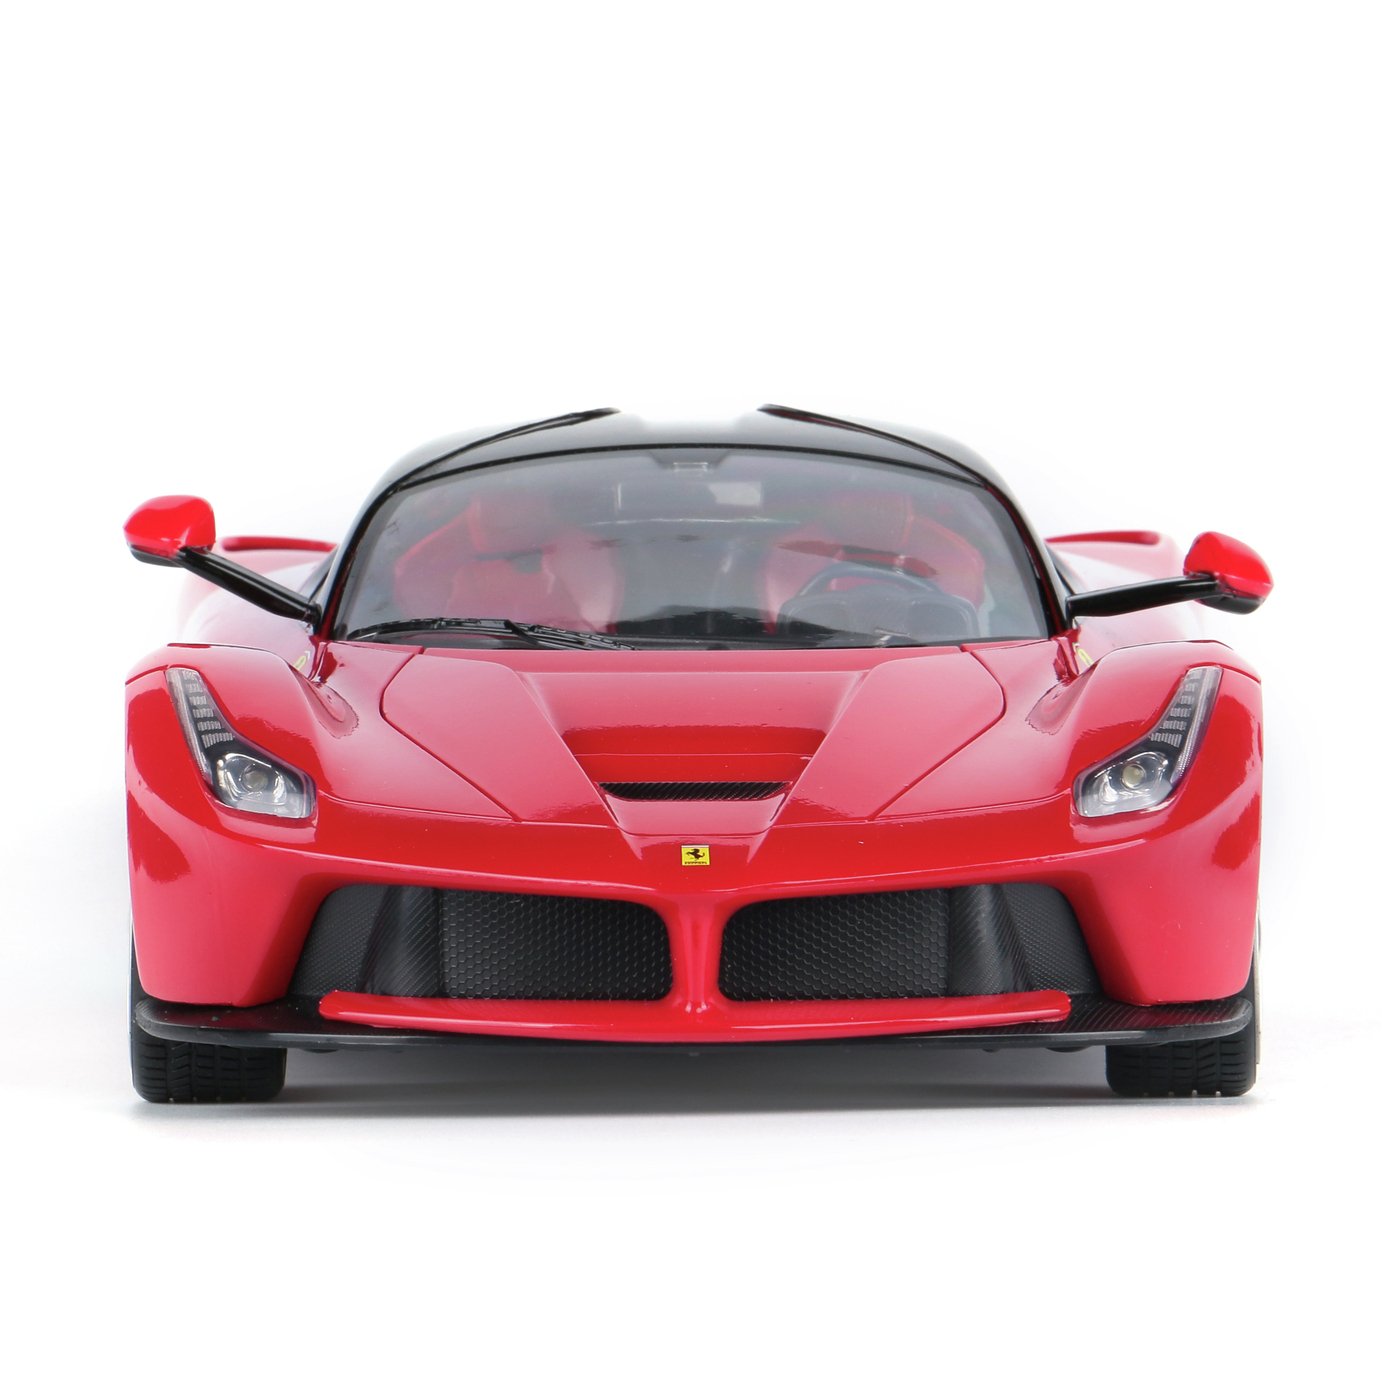 Radio Controlled LA Ferrari Headlights & Doors 2.4GHZ Review